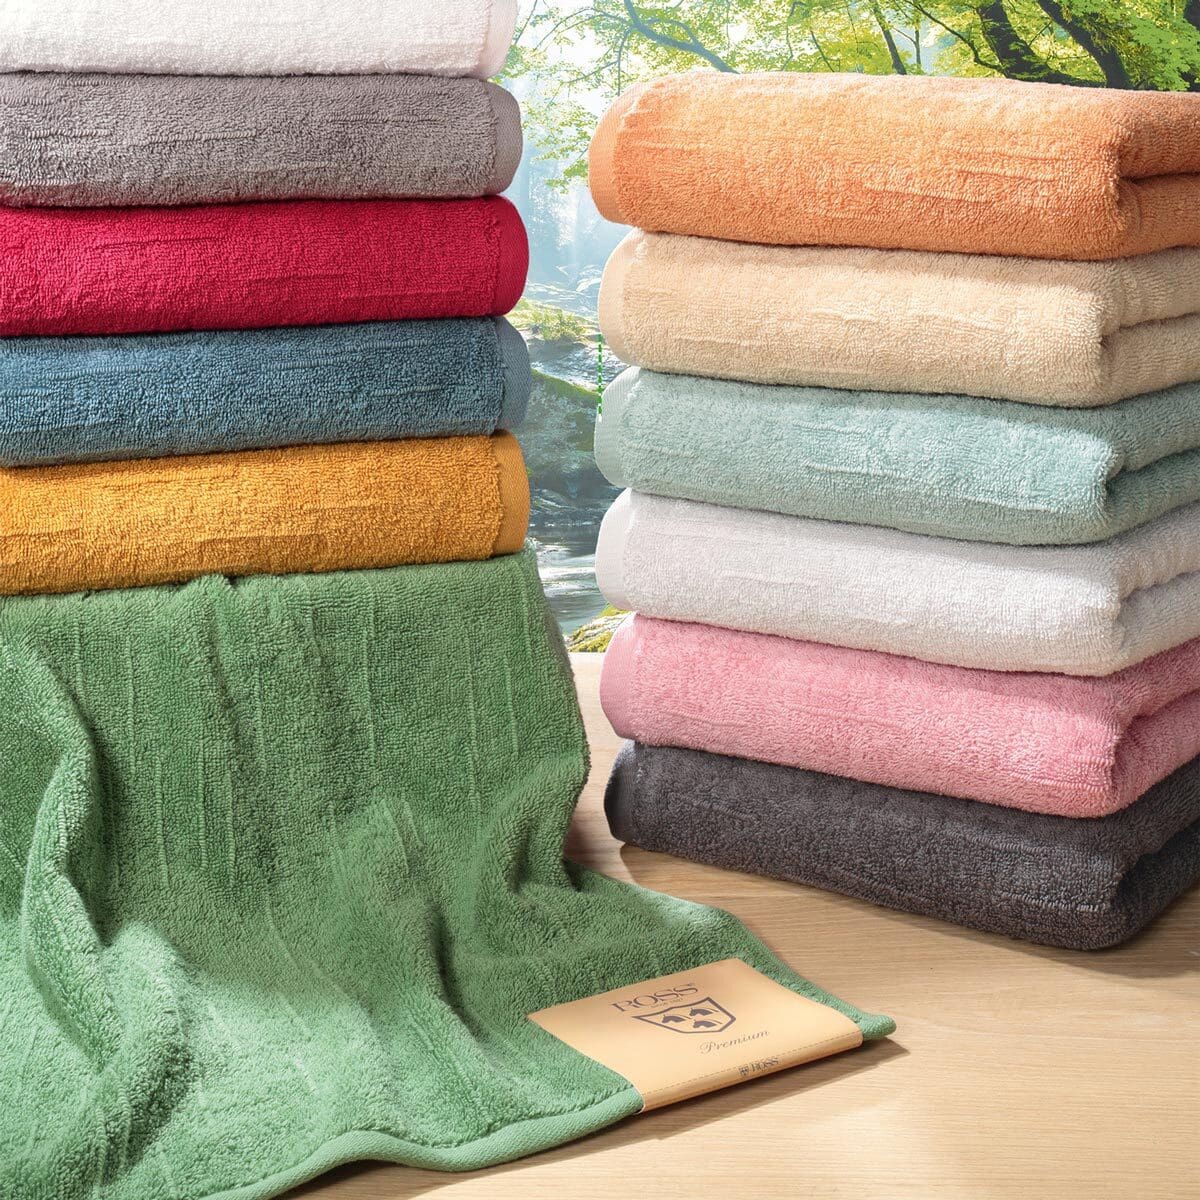 Ross Premium Uni Handtücher Boucle Shop günstig kaufen online bei Bettwaren